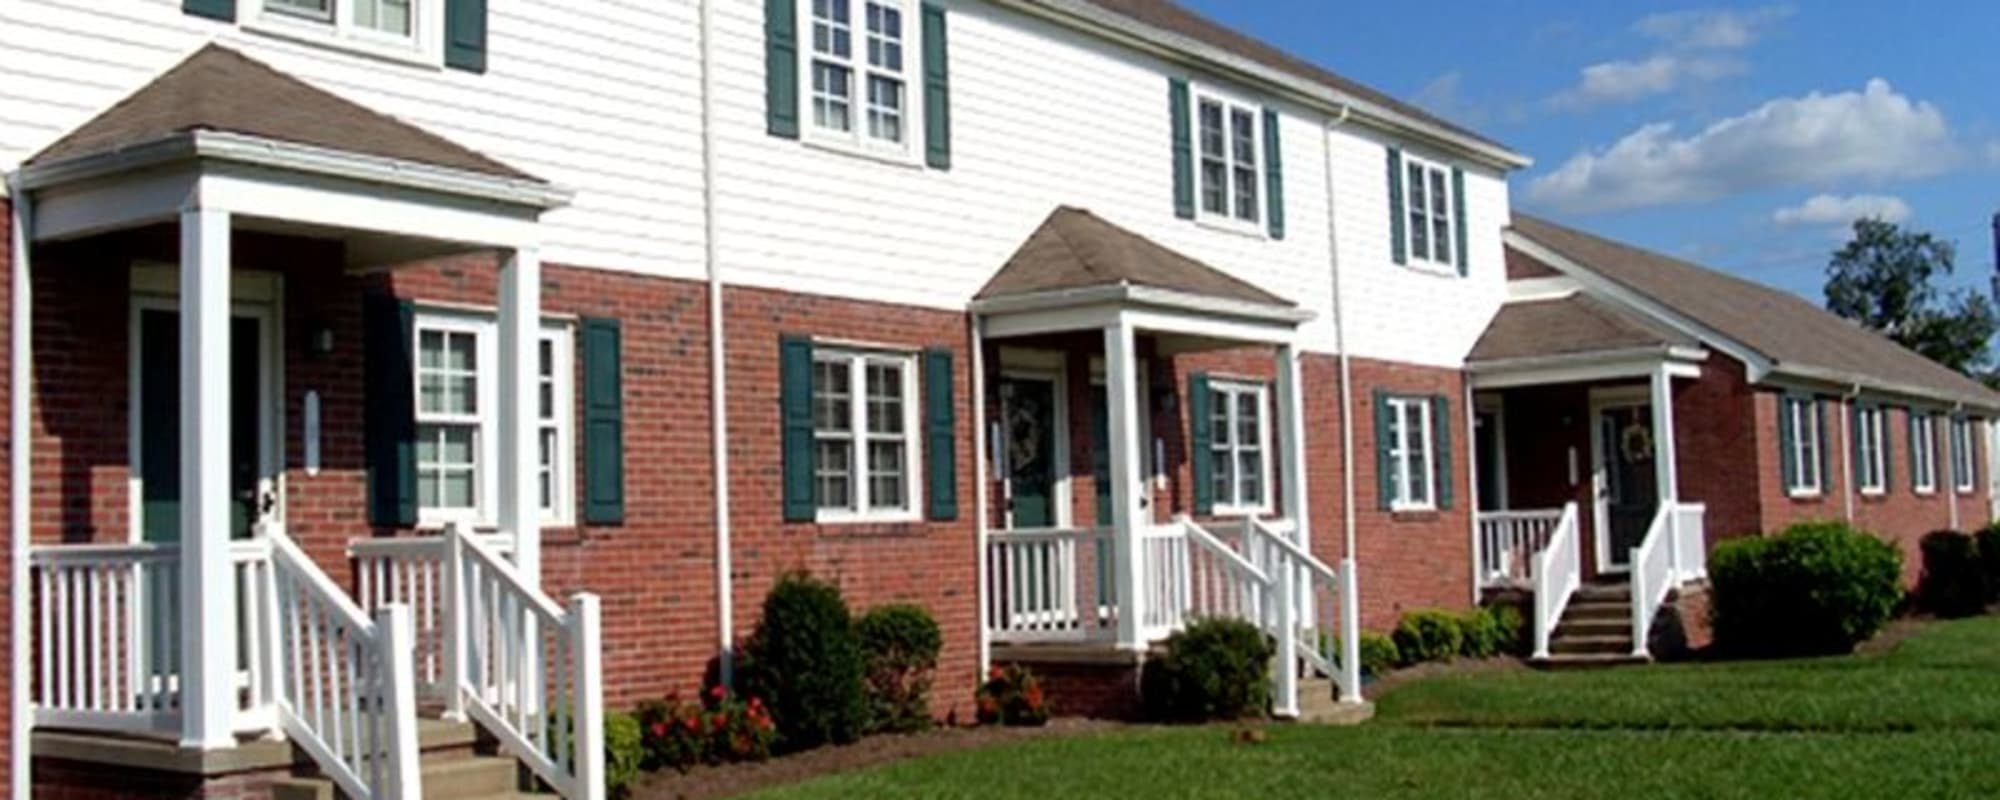 Exterior view of homes at SP Enlist in Norfolk, Virginia